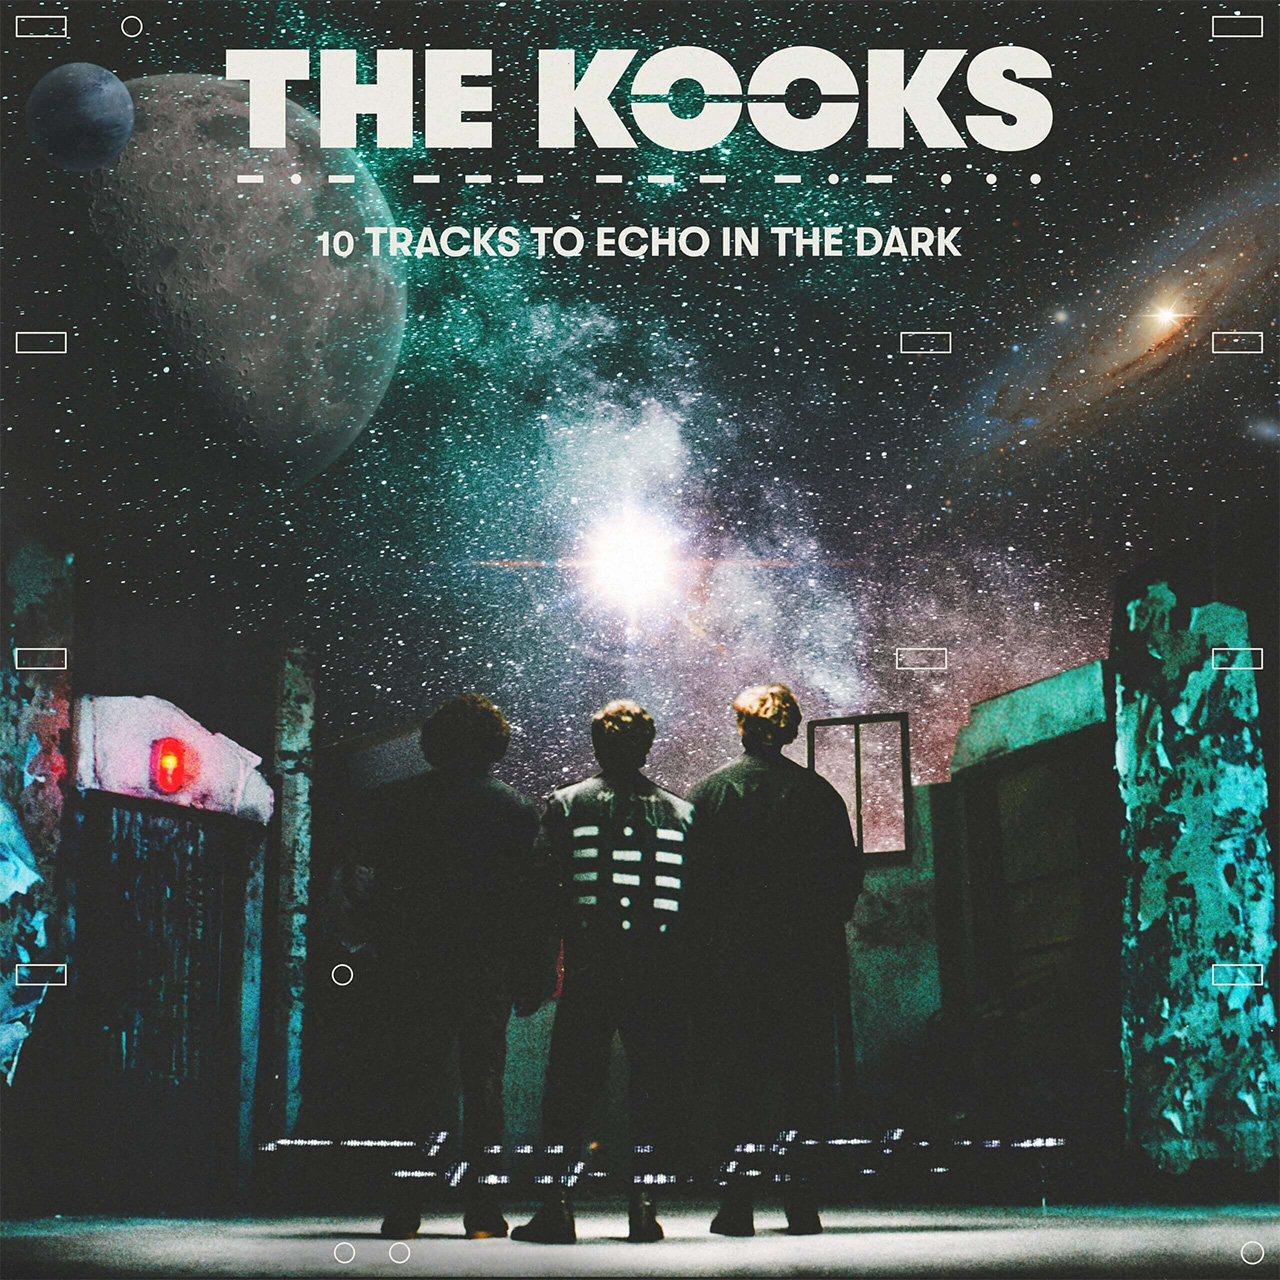 The Kooks "10 Tracks To Echo In The Dark"